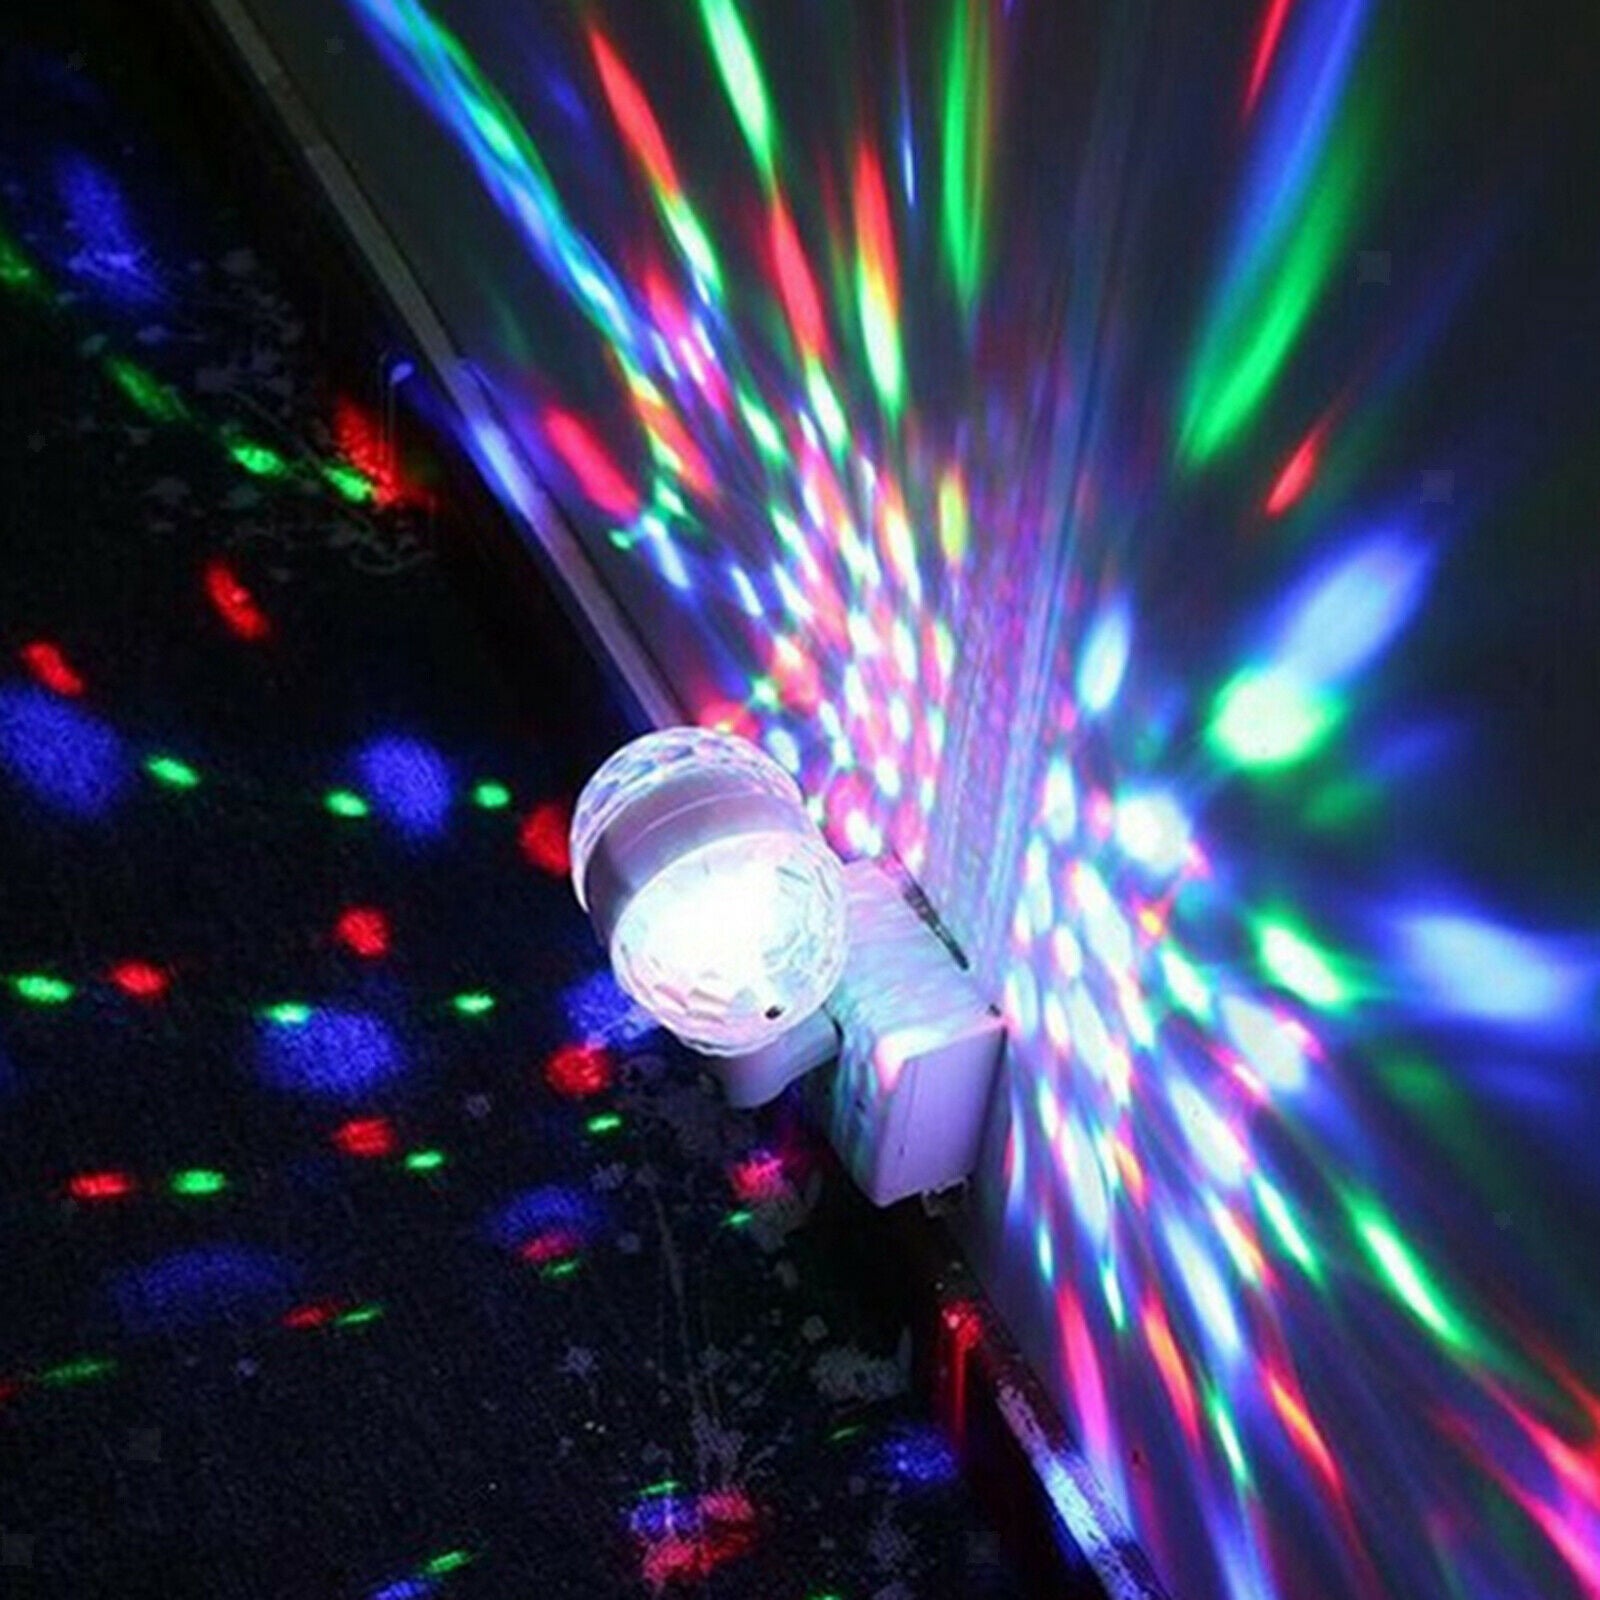 Club DJ Disco Stage E27 6W Light Crystal Ball Bulb Two-Head Rotating Decor